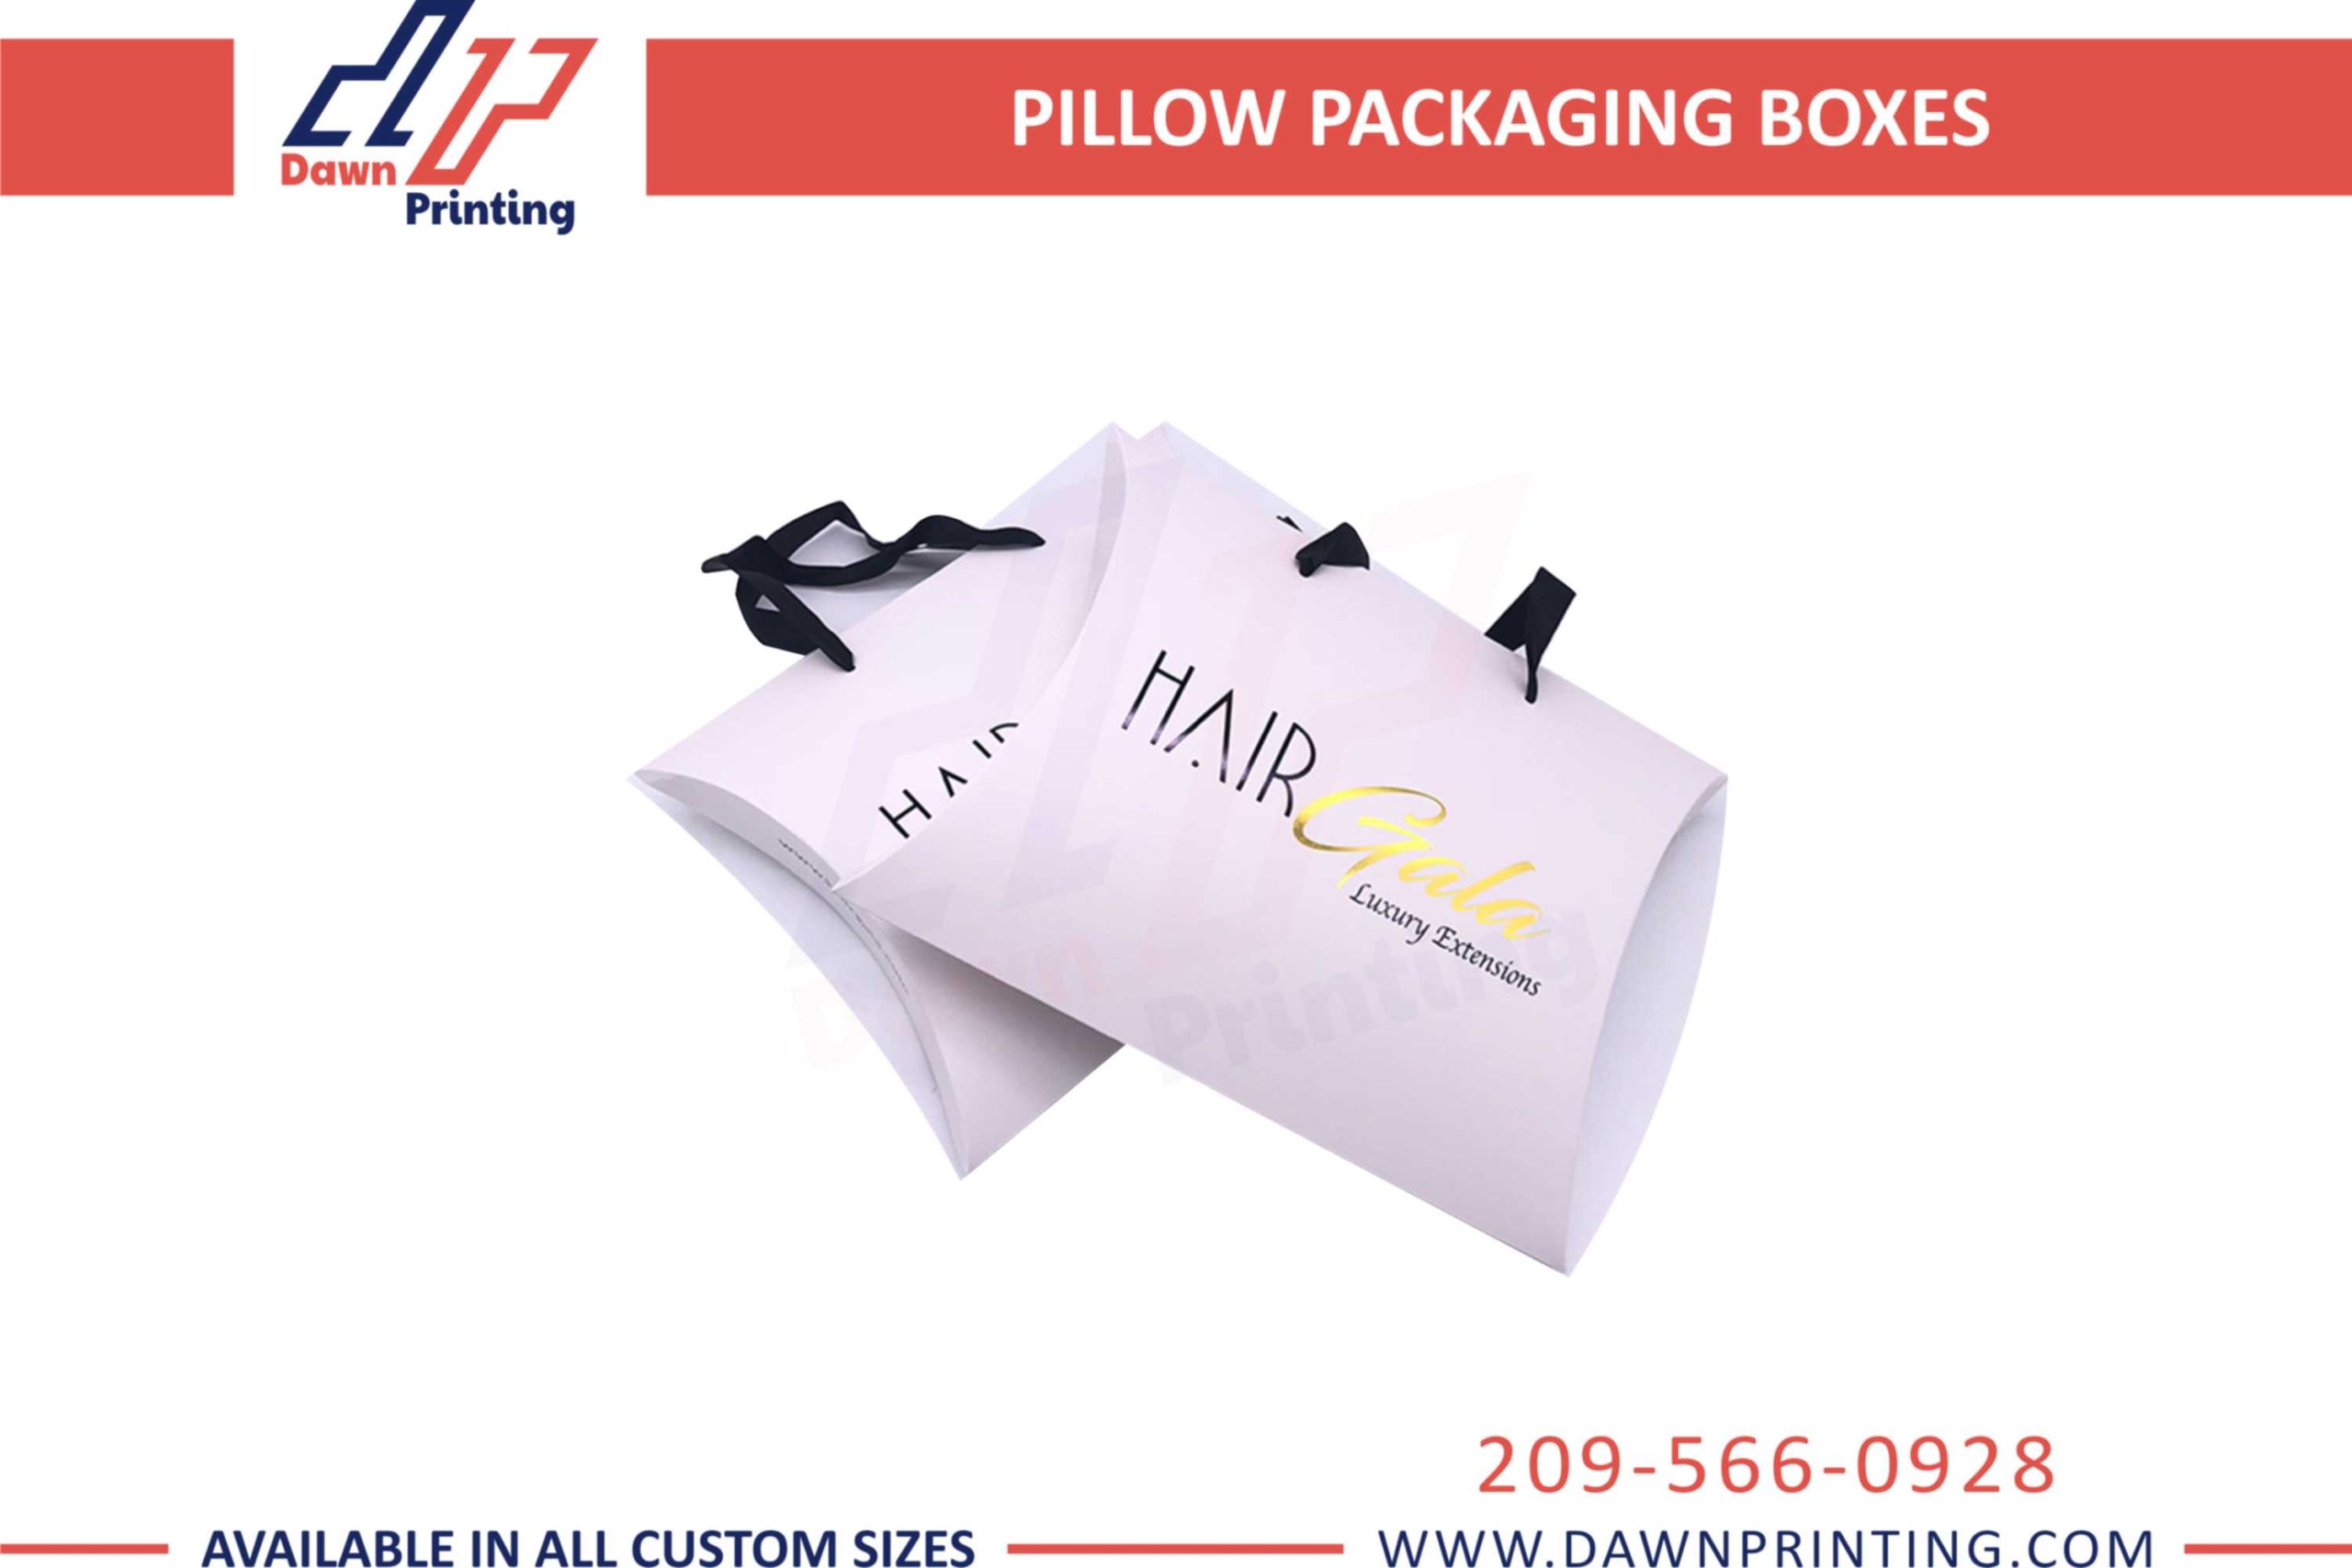 Dawn Printing - Custom Pillow Packaging Boxes